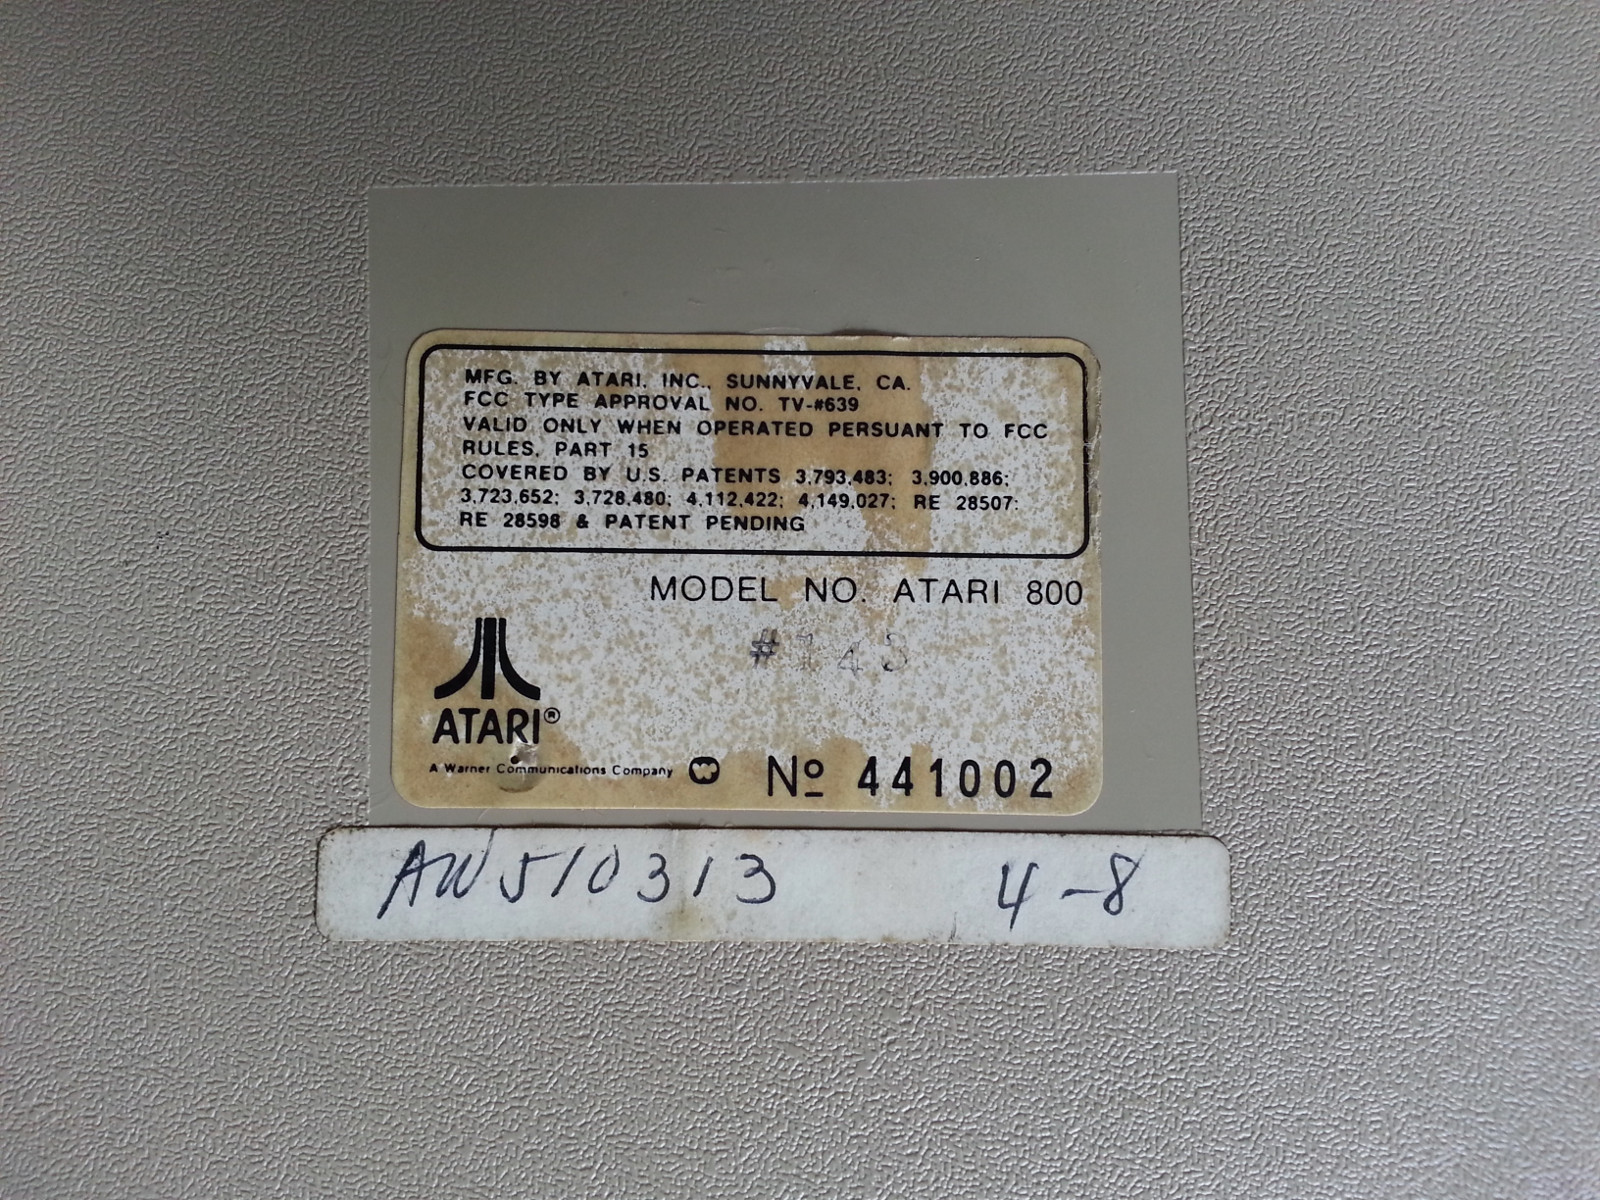 Atari 800 NTSC label